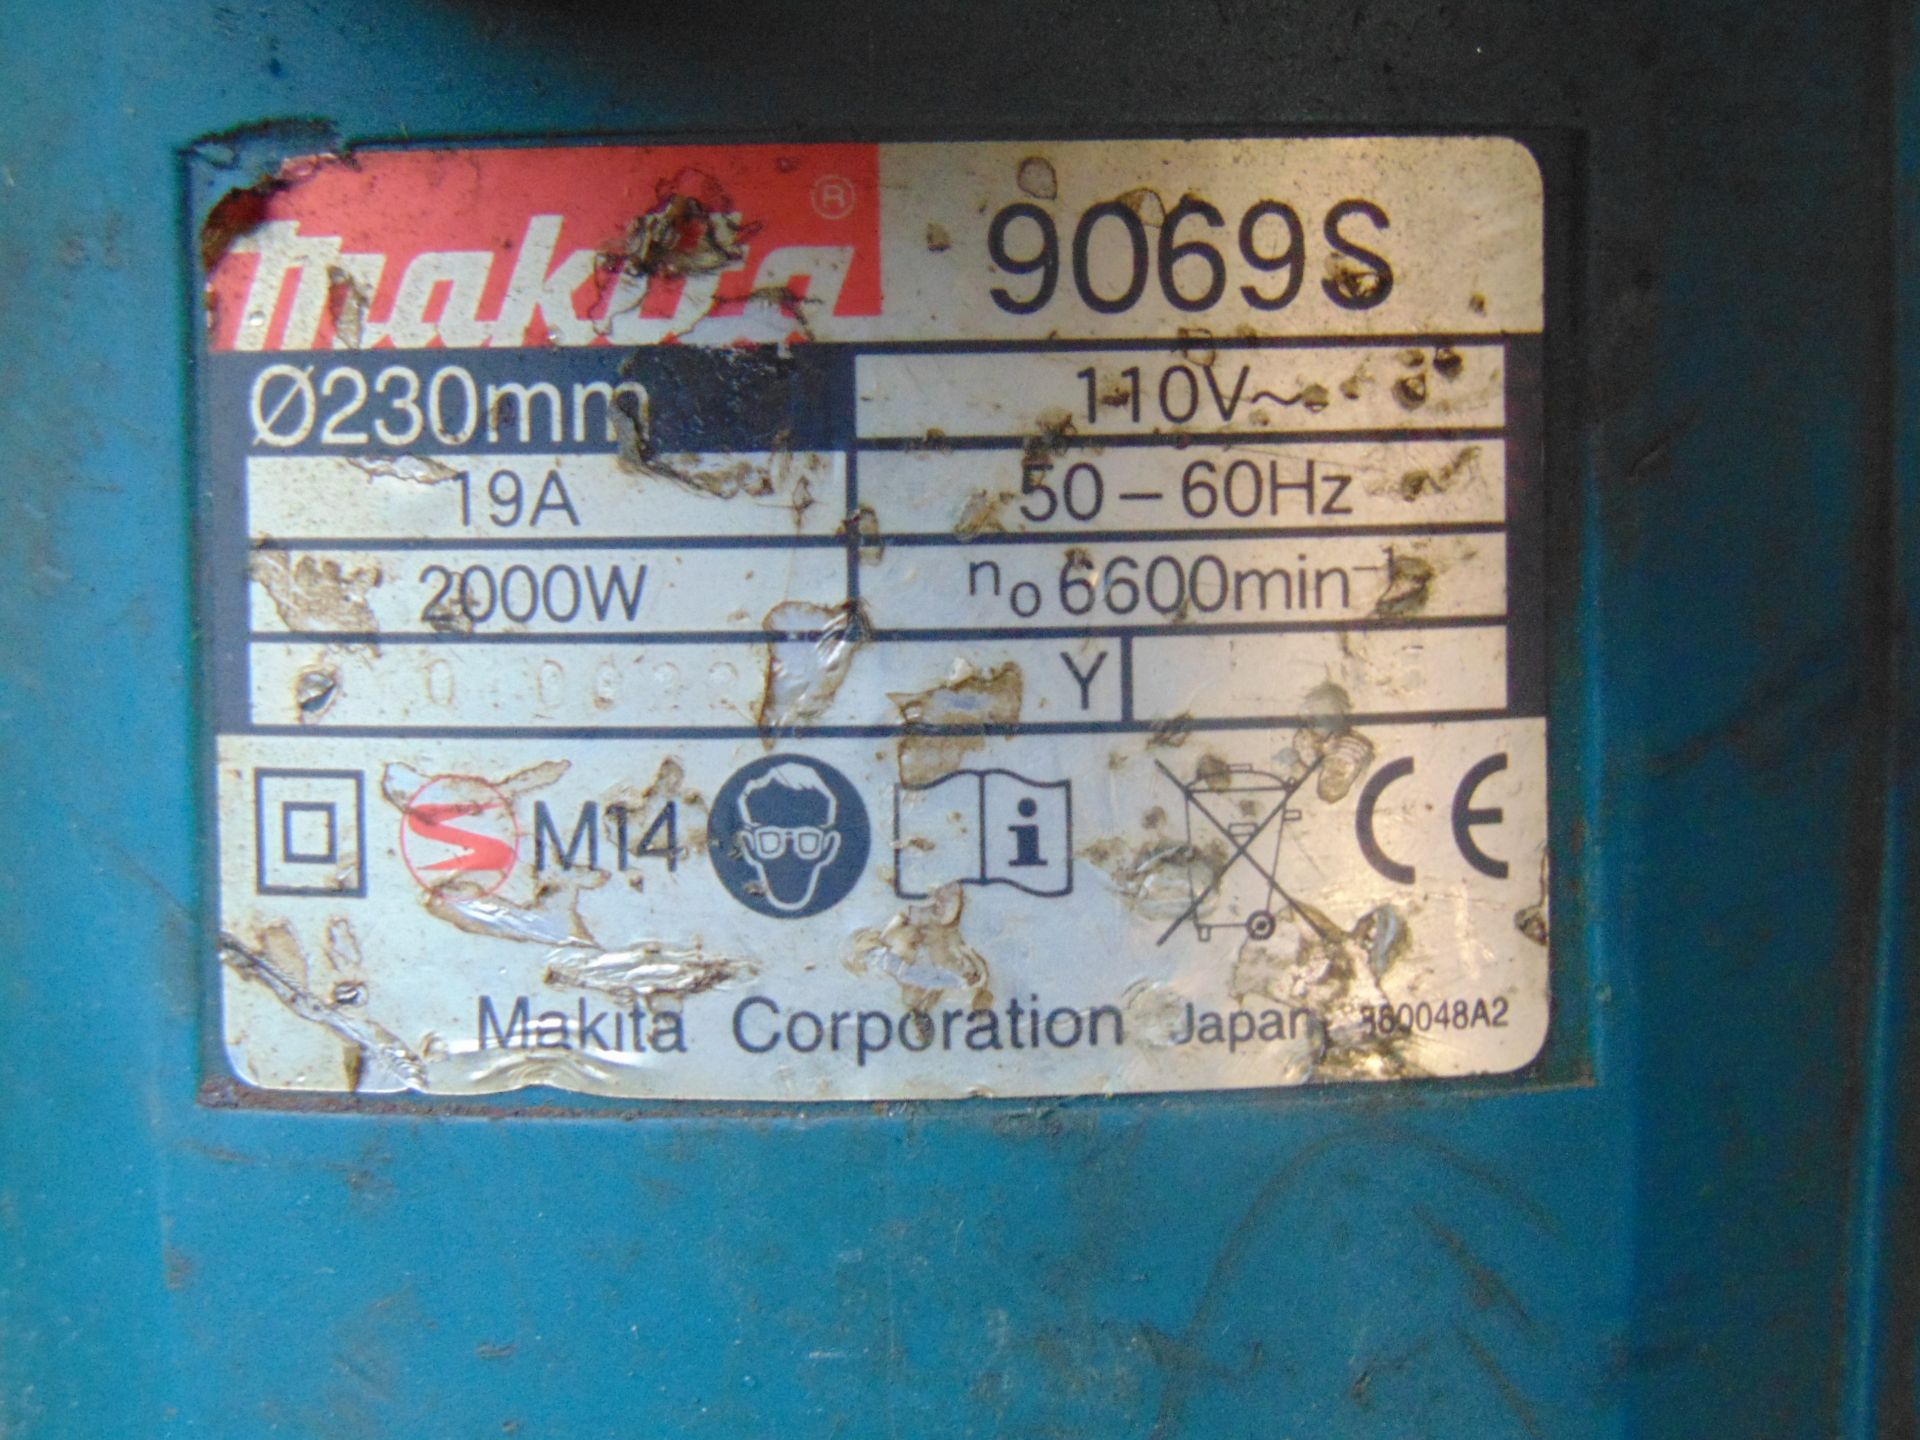 MAKITA HD POWER GRINDER 115 VOLT IN CASE - Image 5 of 6